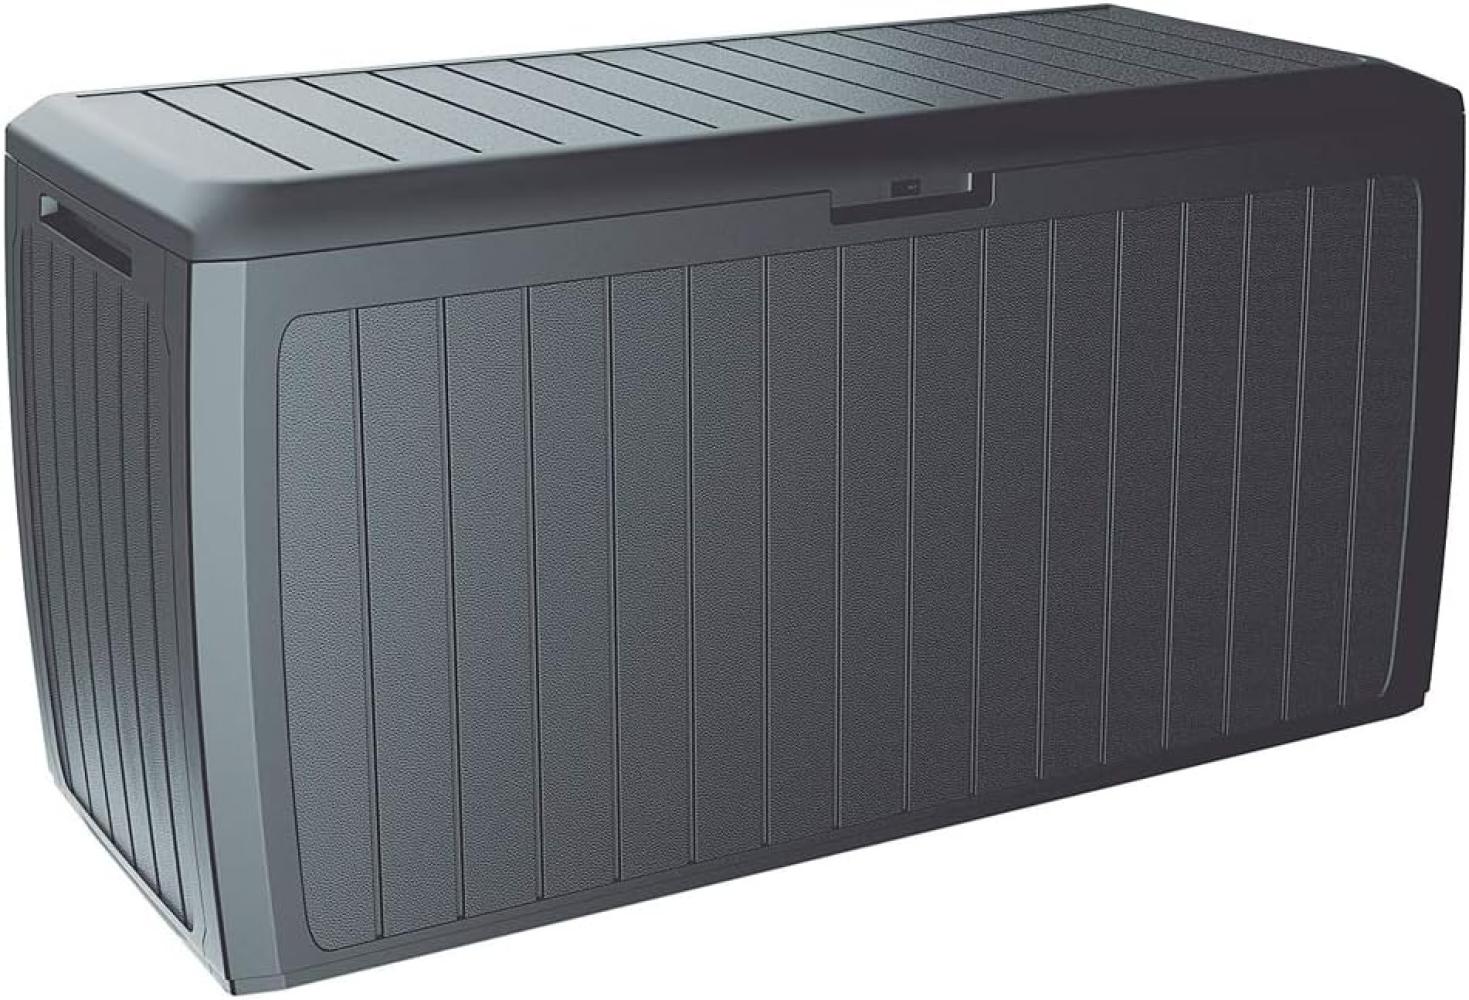 DEUBA Auflagenbox Kissenbox Deckel bis zu 100 kg belastbar Gerätetruhe Kiste Gartentruhe Board PLUS anthrazit Bild 1